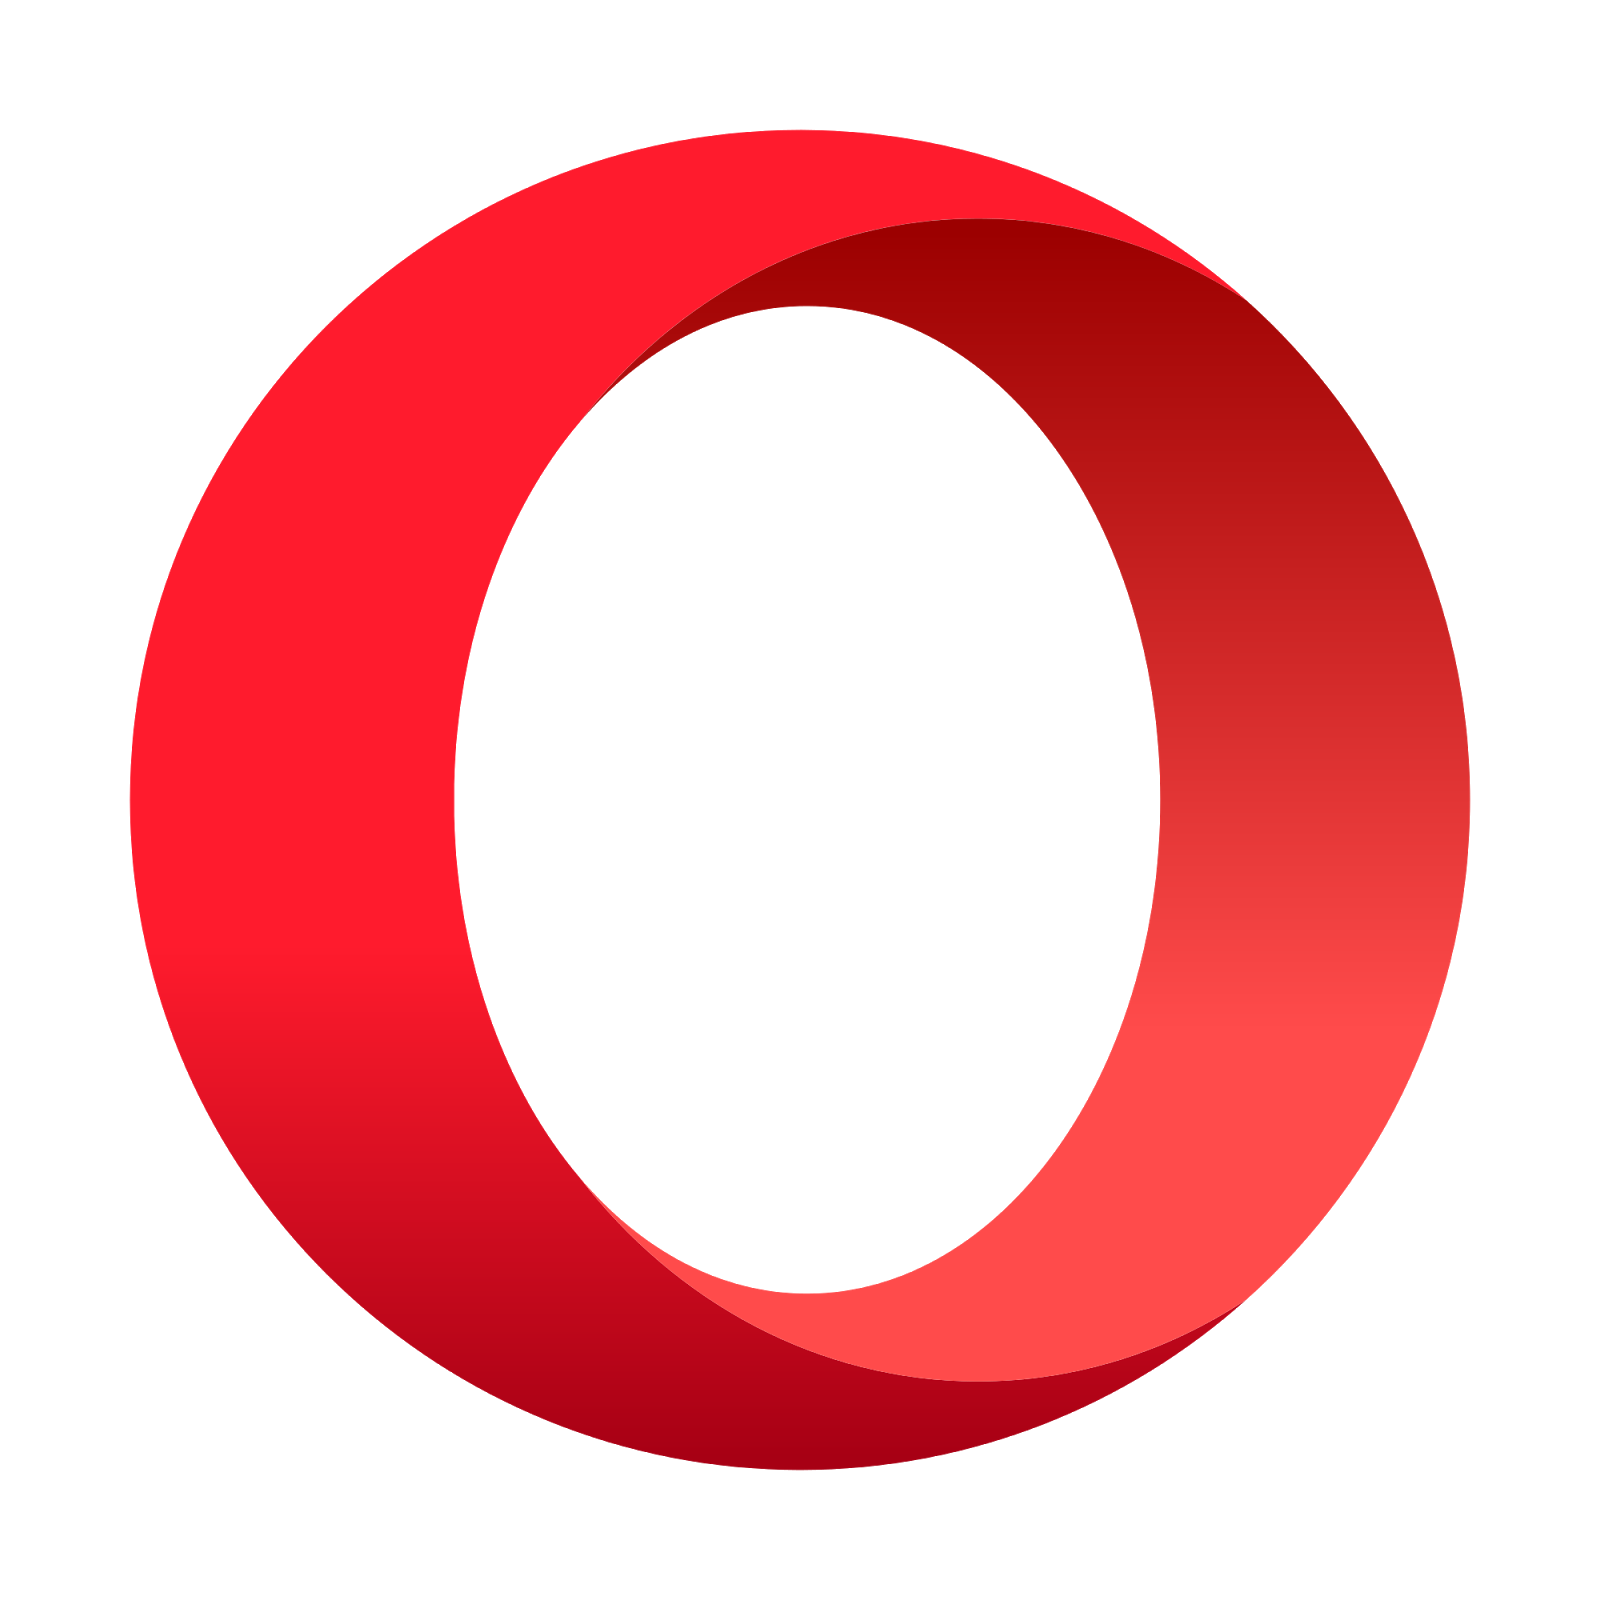 opera browser download